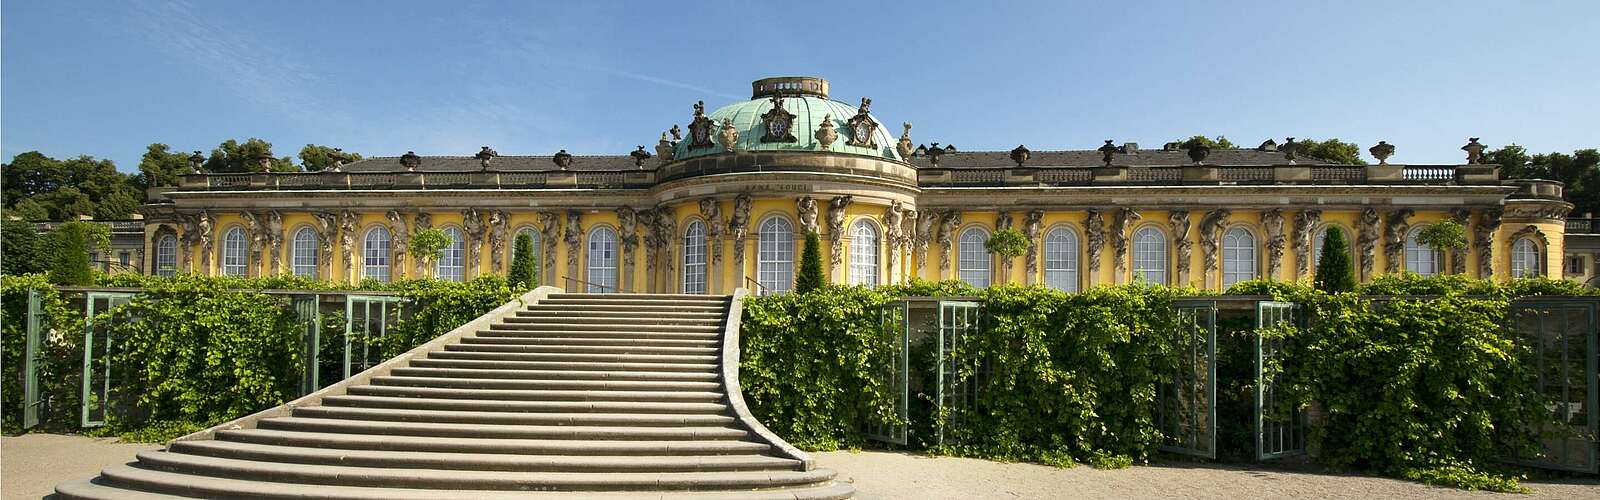 Schloss Sanssouci,
        
    

        Picture: TMB-Fotoarchiv/SPSG/Leo Seidel